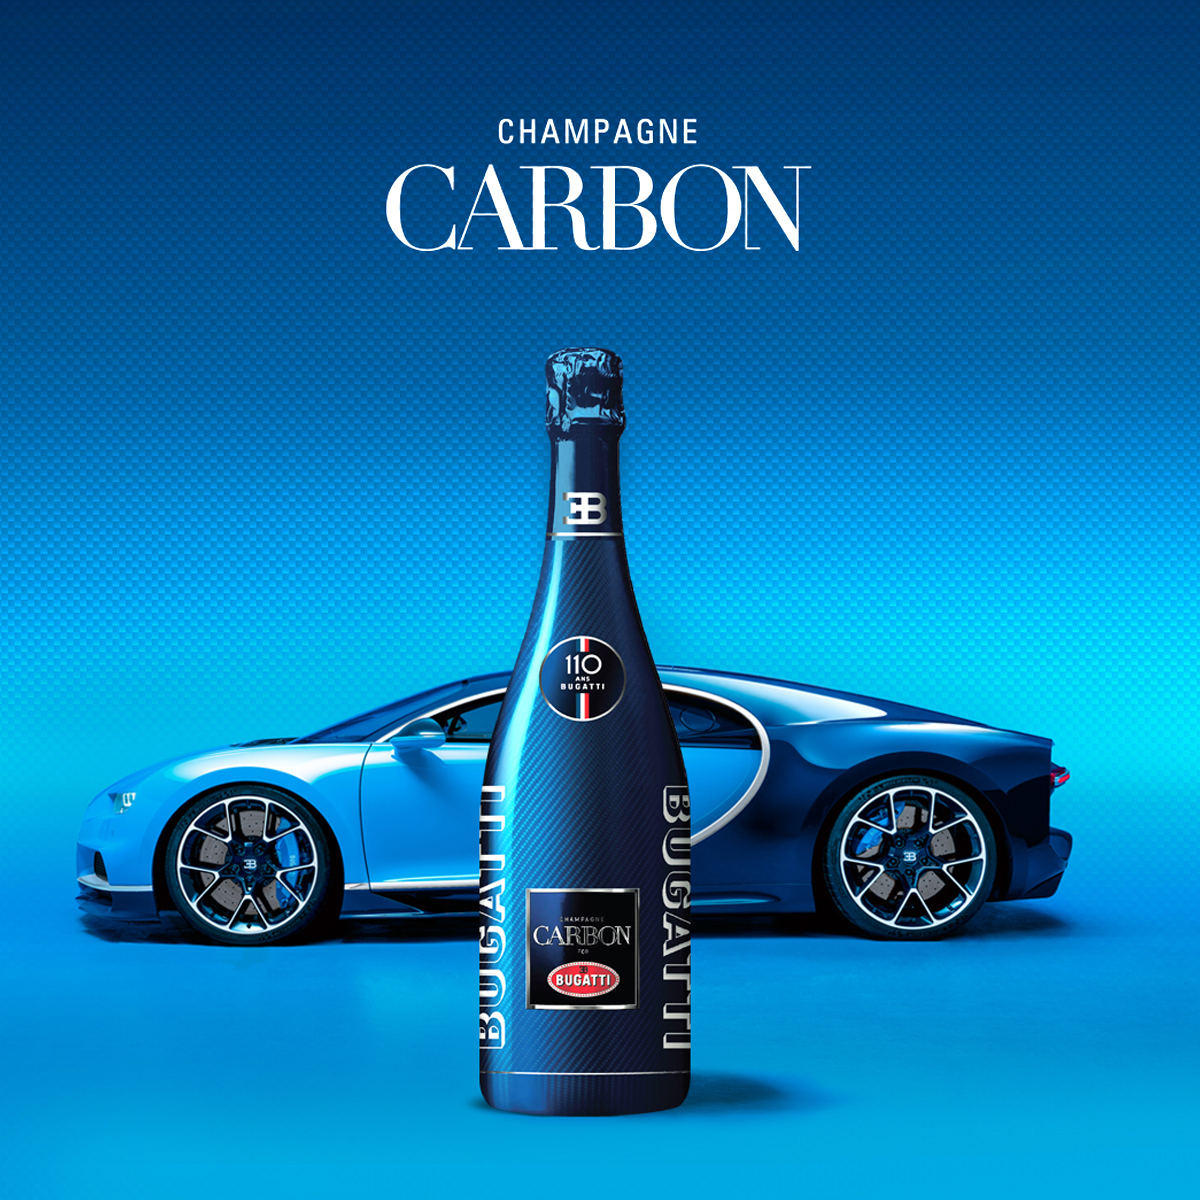 Carbon Champagne - Case study, portfolio - Studio Present